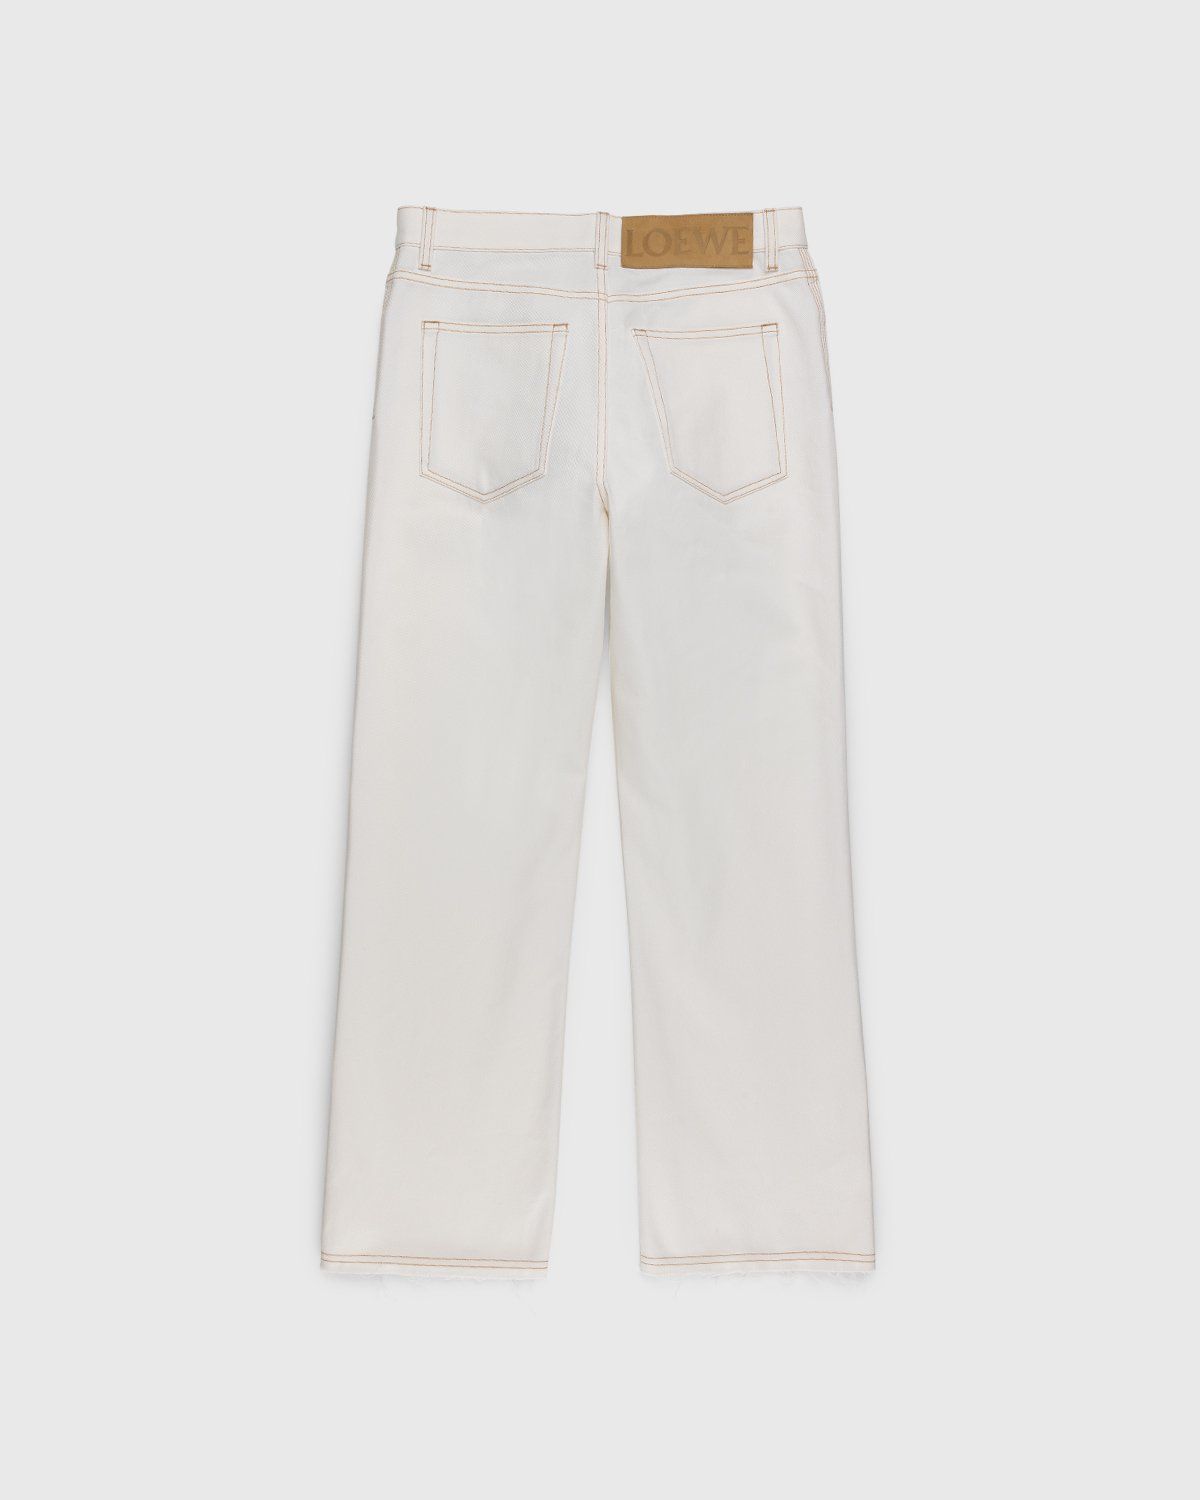 Loewe – Paula's Ibiza Boot Cut Denim Trousers White - Pants - White - Image 2